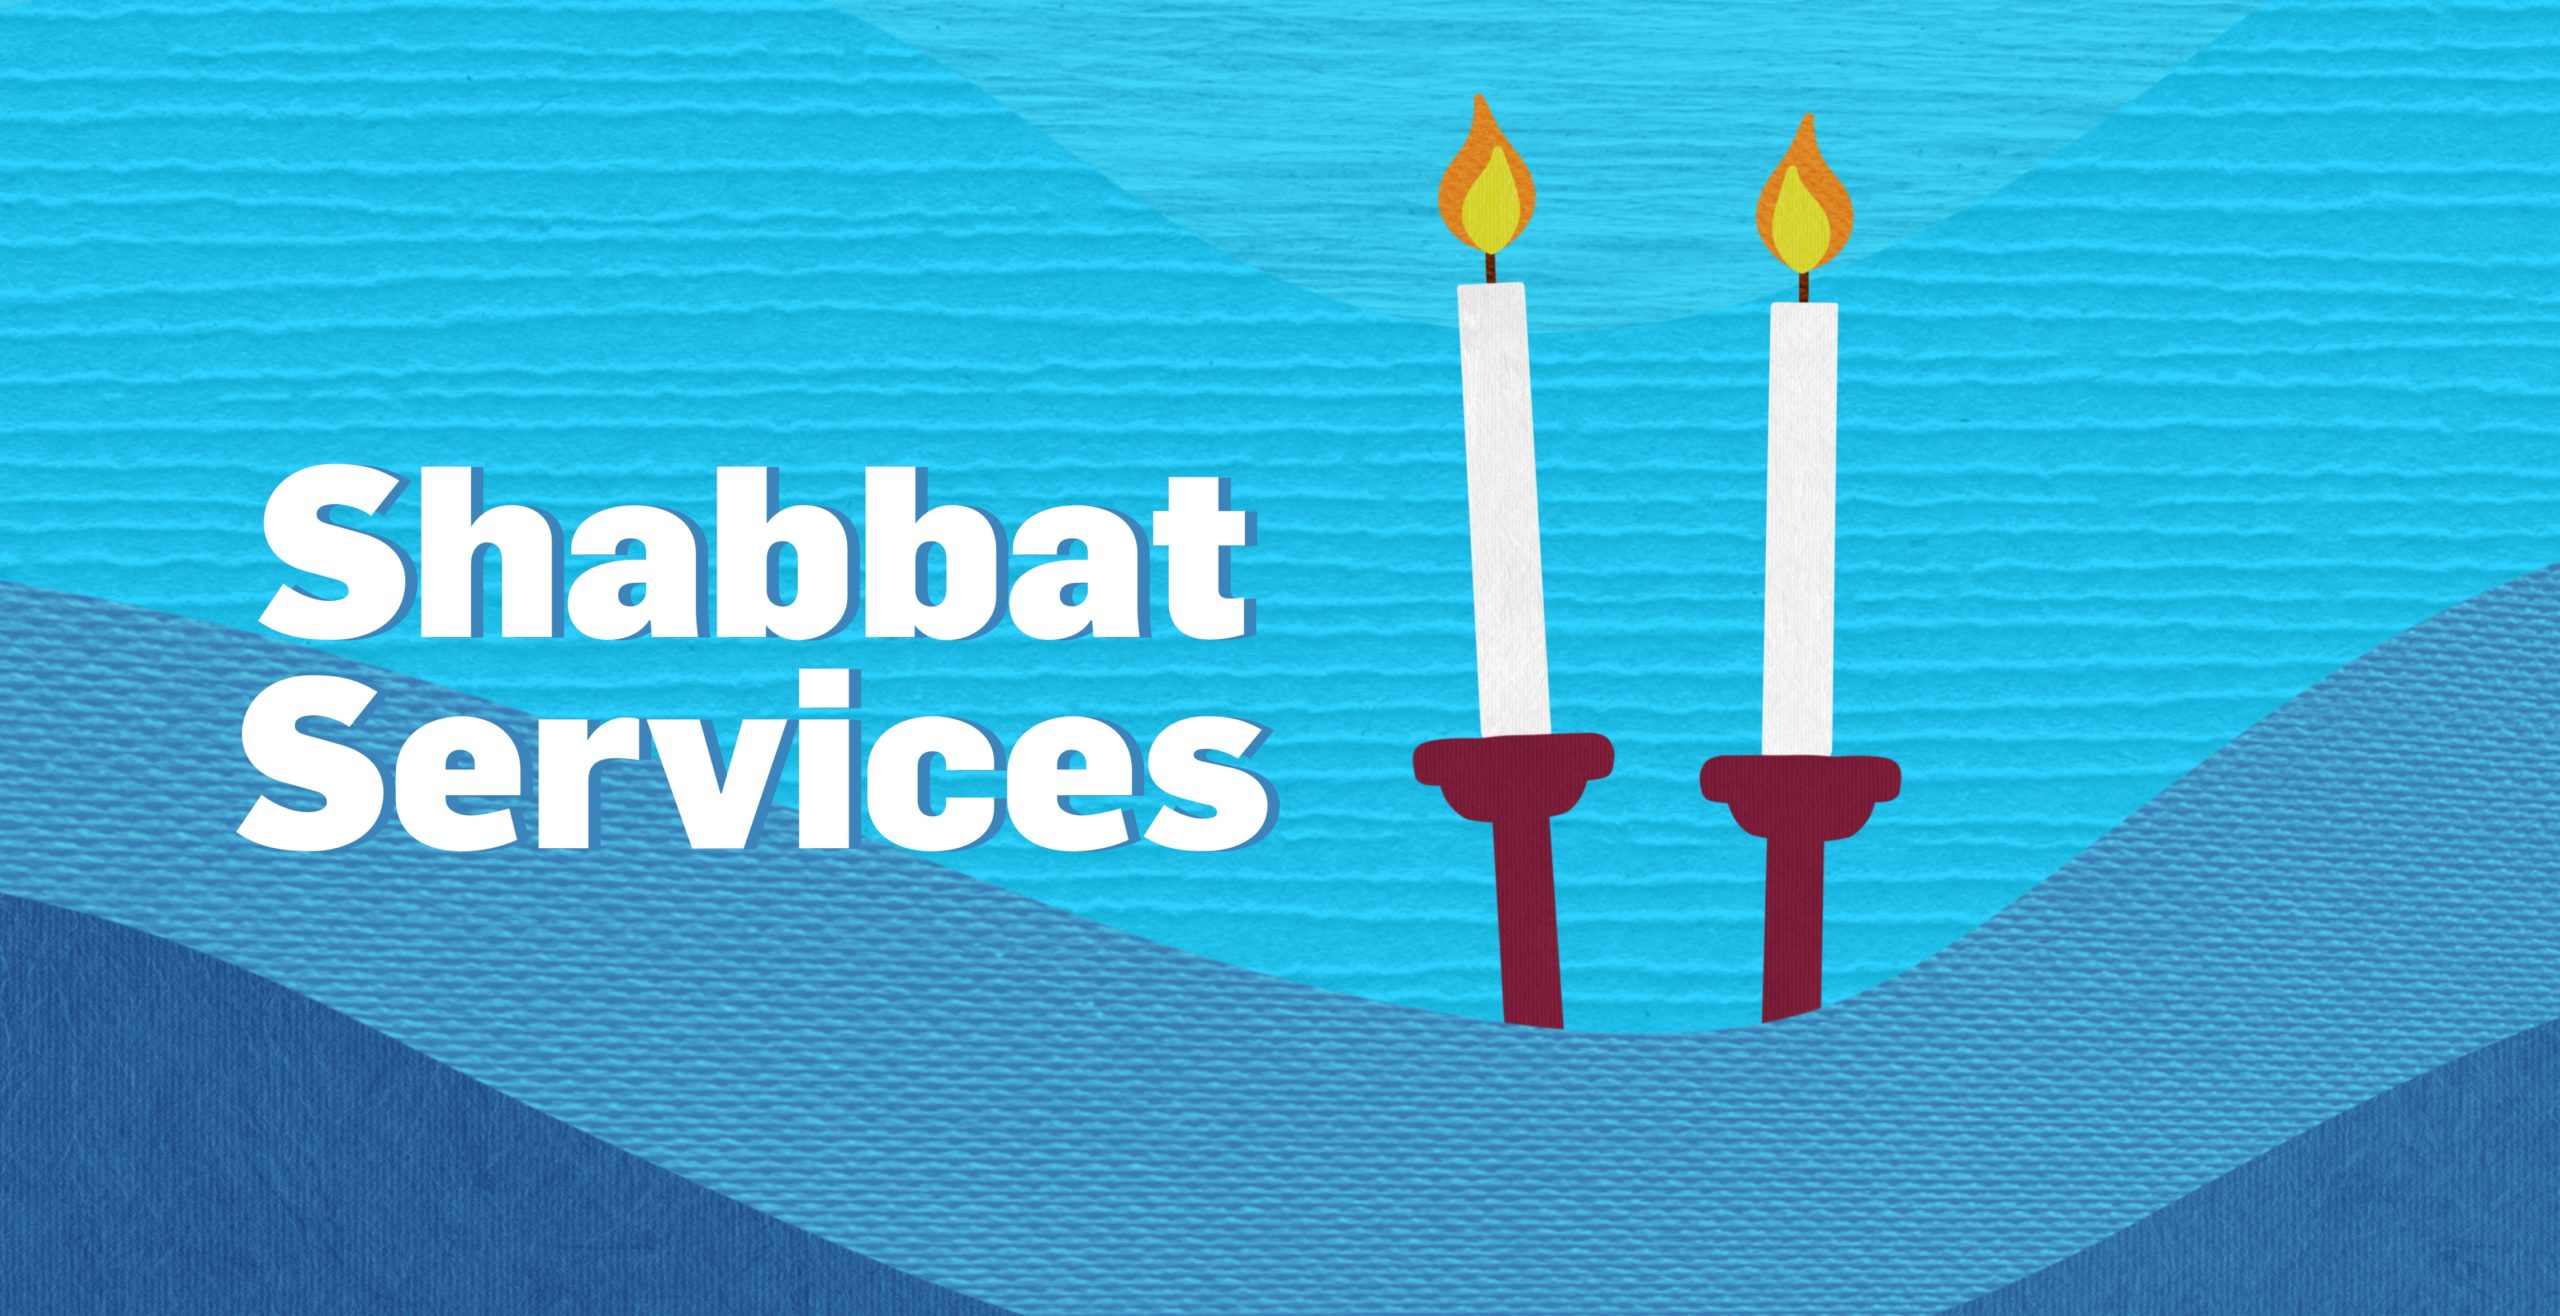 Instagram Live Shabbat Service